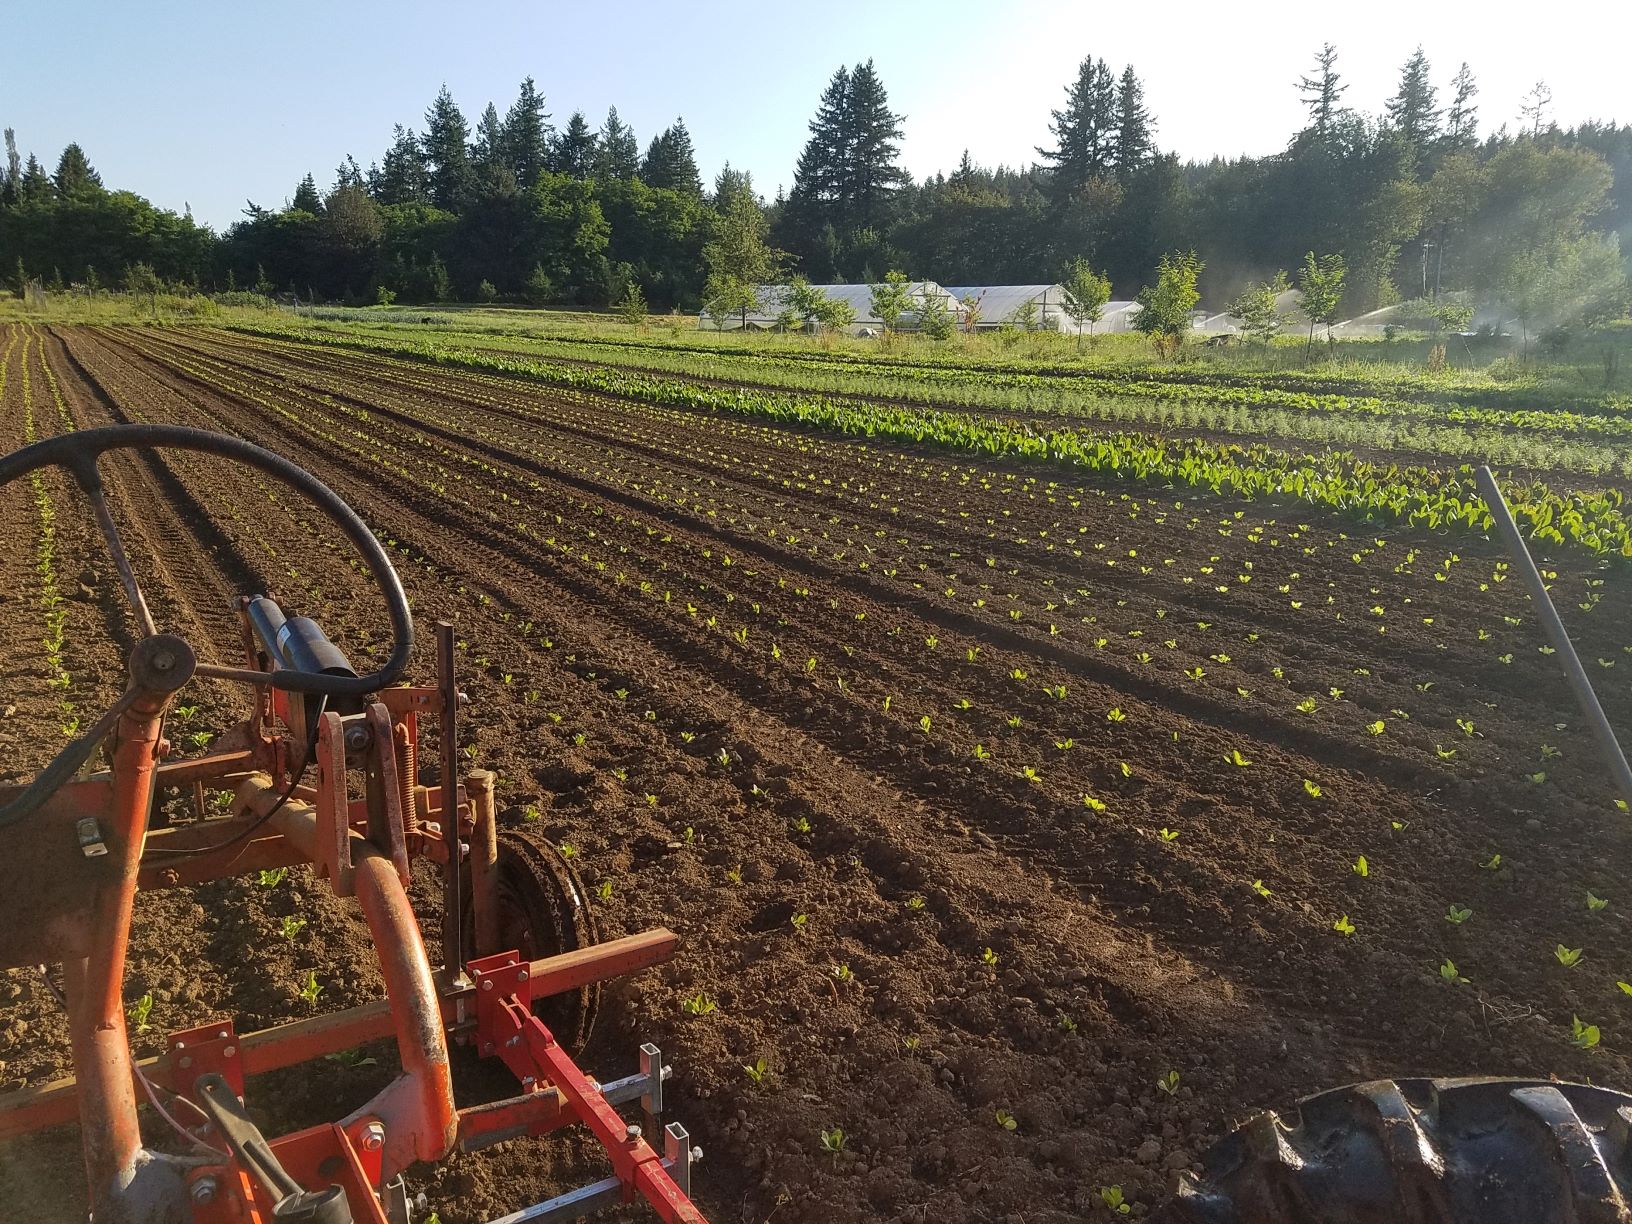 Farm Field in Washington